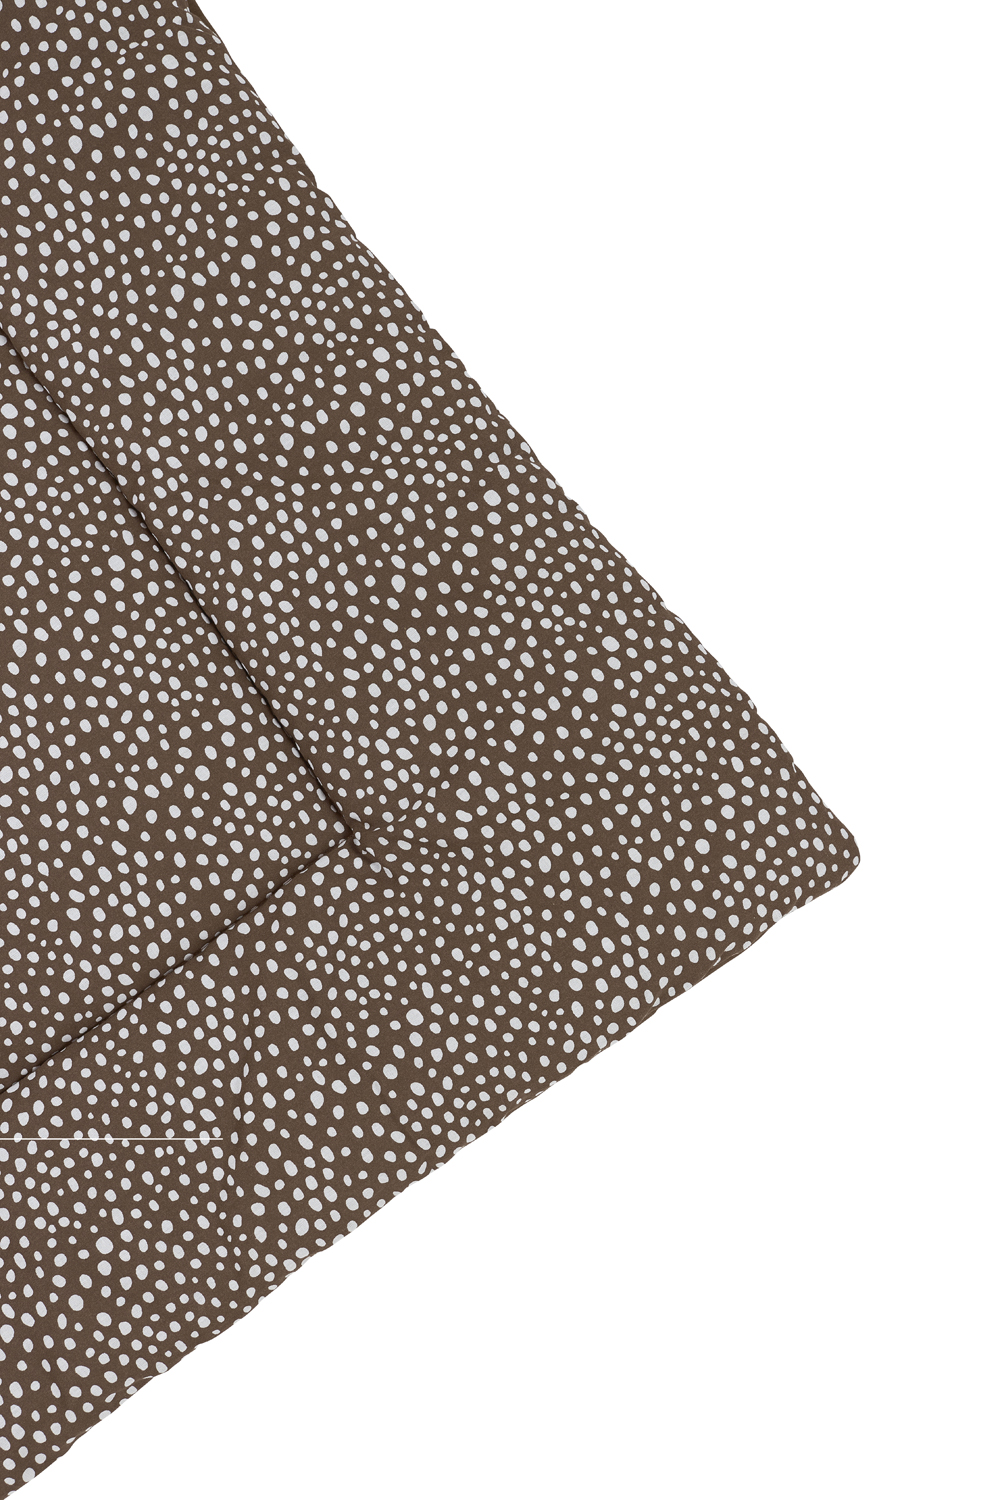 Playpen Mattress Cheetah/Uni - Chocolate - 80X100cm